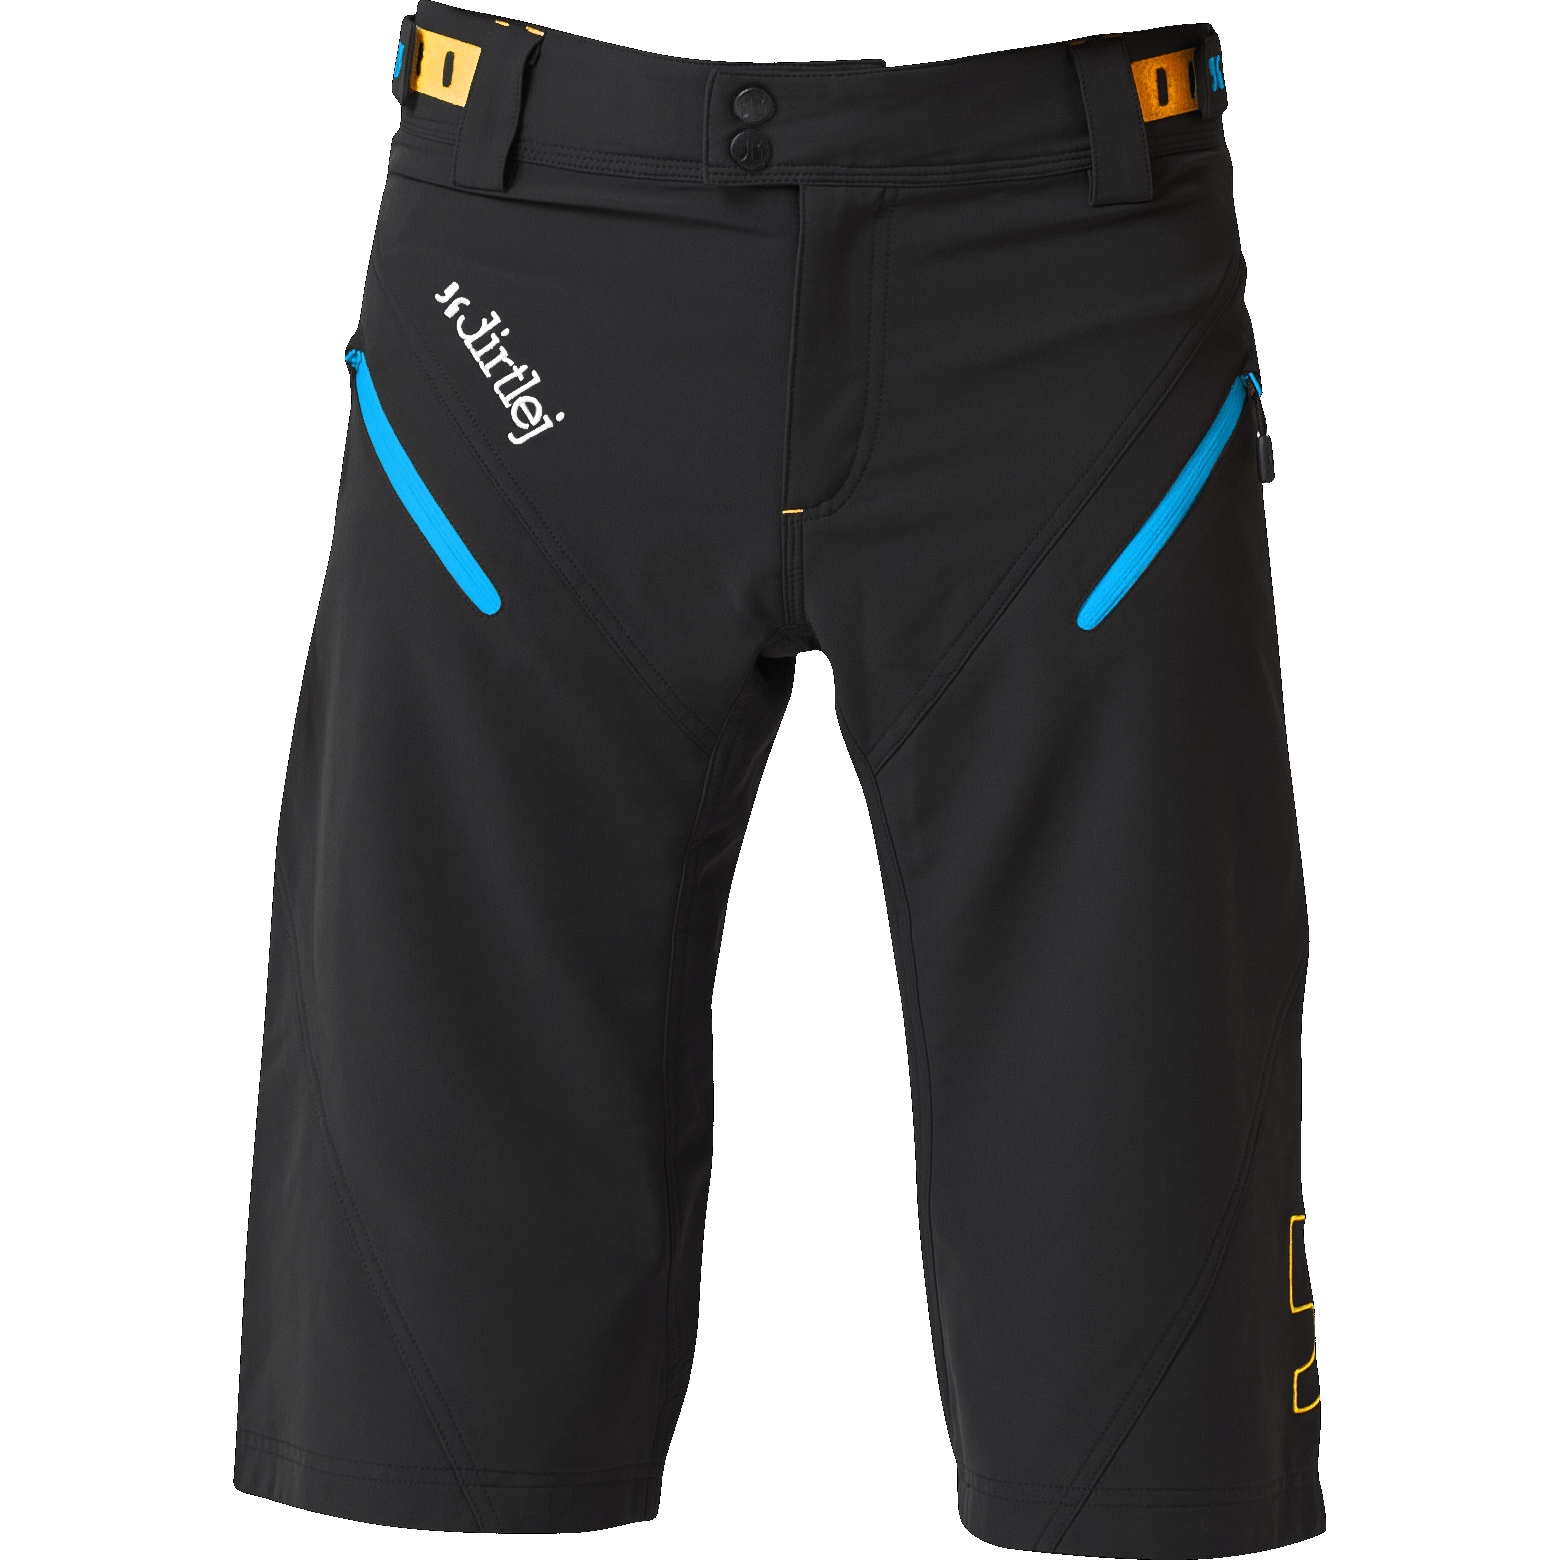 Productfoto van Dirtlej Trailscout Summer Heren MTB-Shorts - zwart/blauw